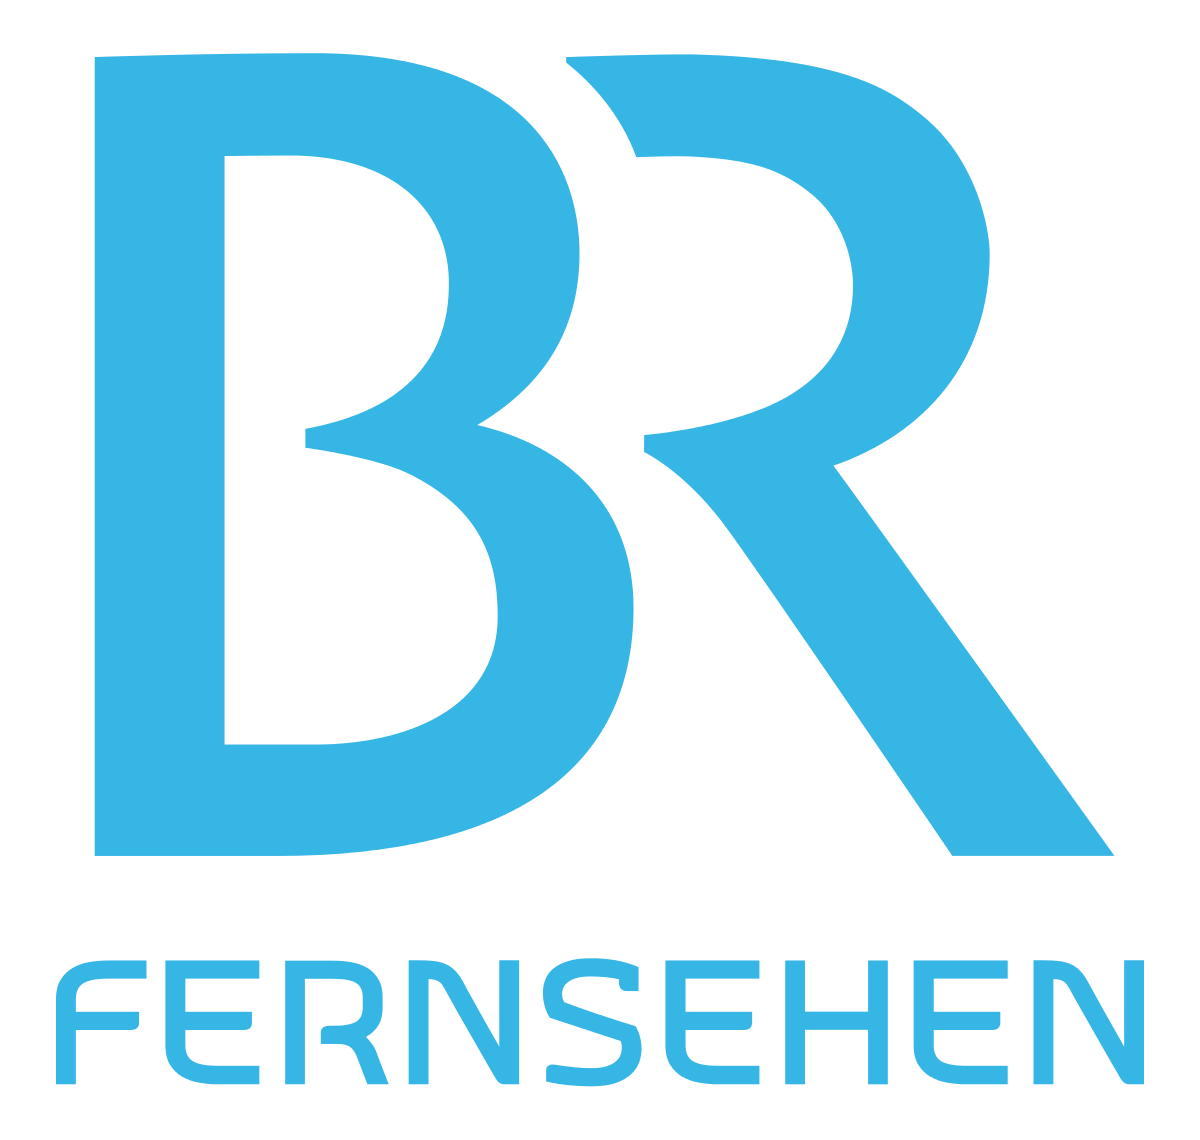 File:BR Fernsehen 2016.svg - Wikimedia Commons